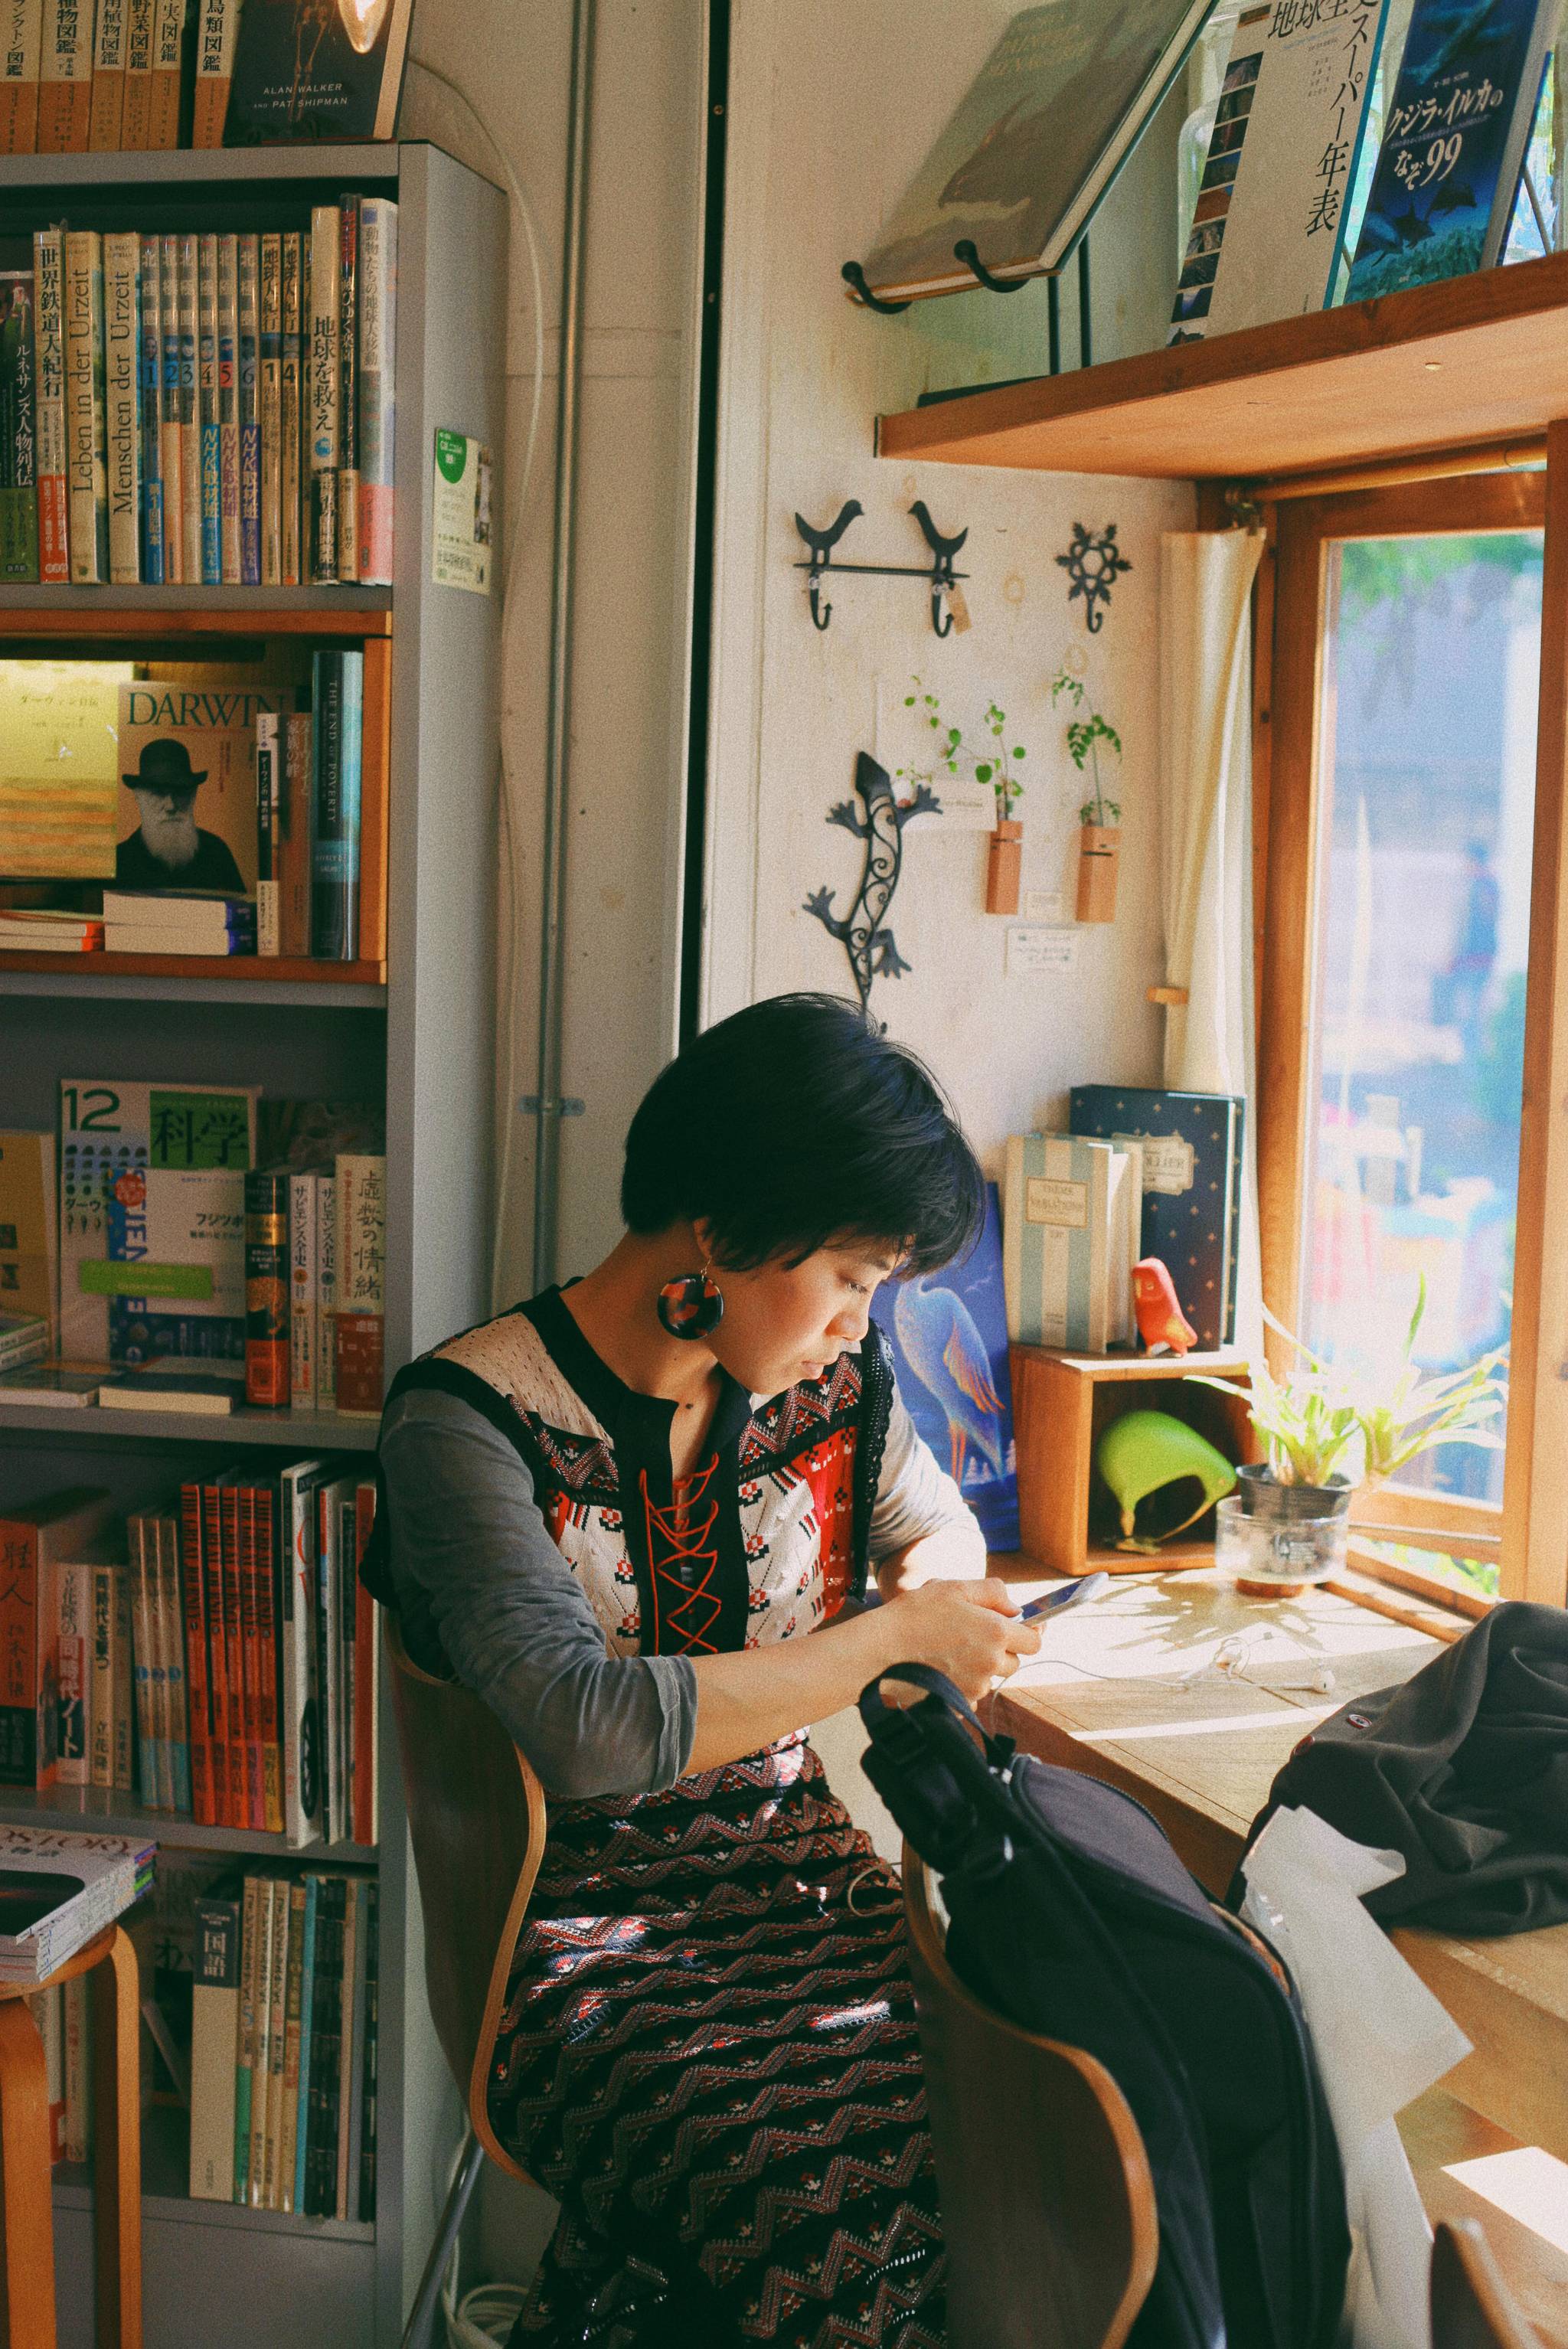 OYO Life: Japanese urbanites rent alone together